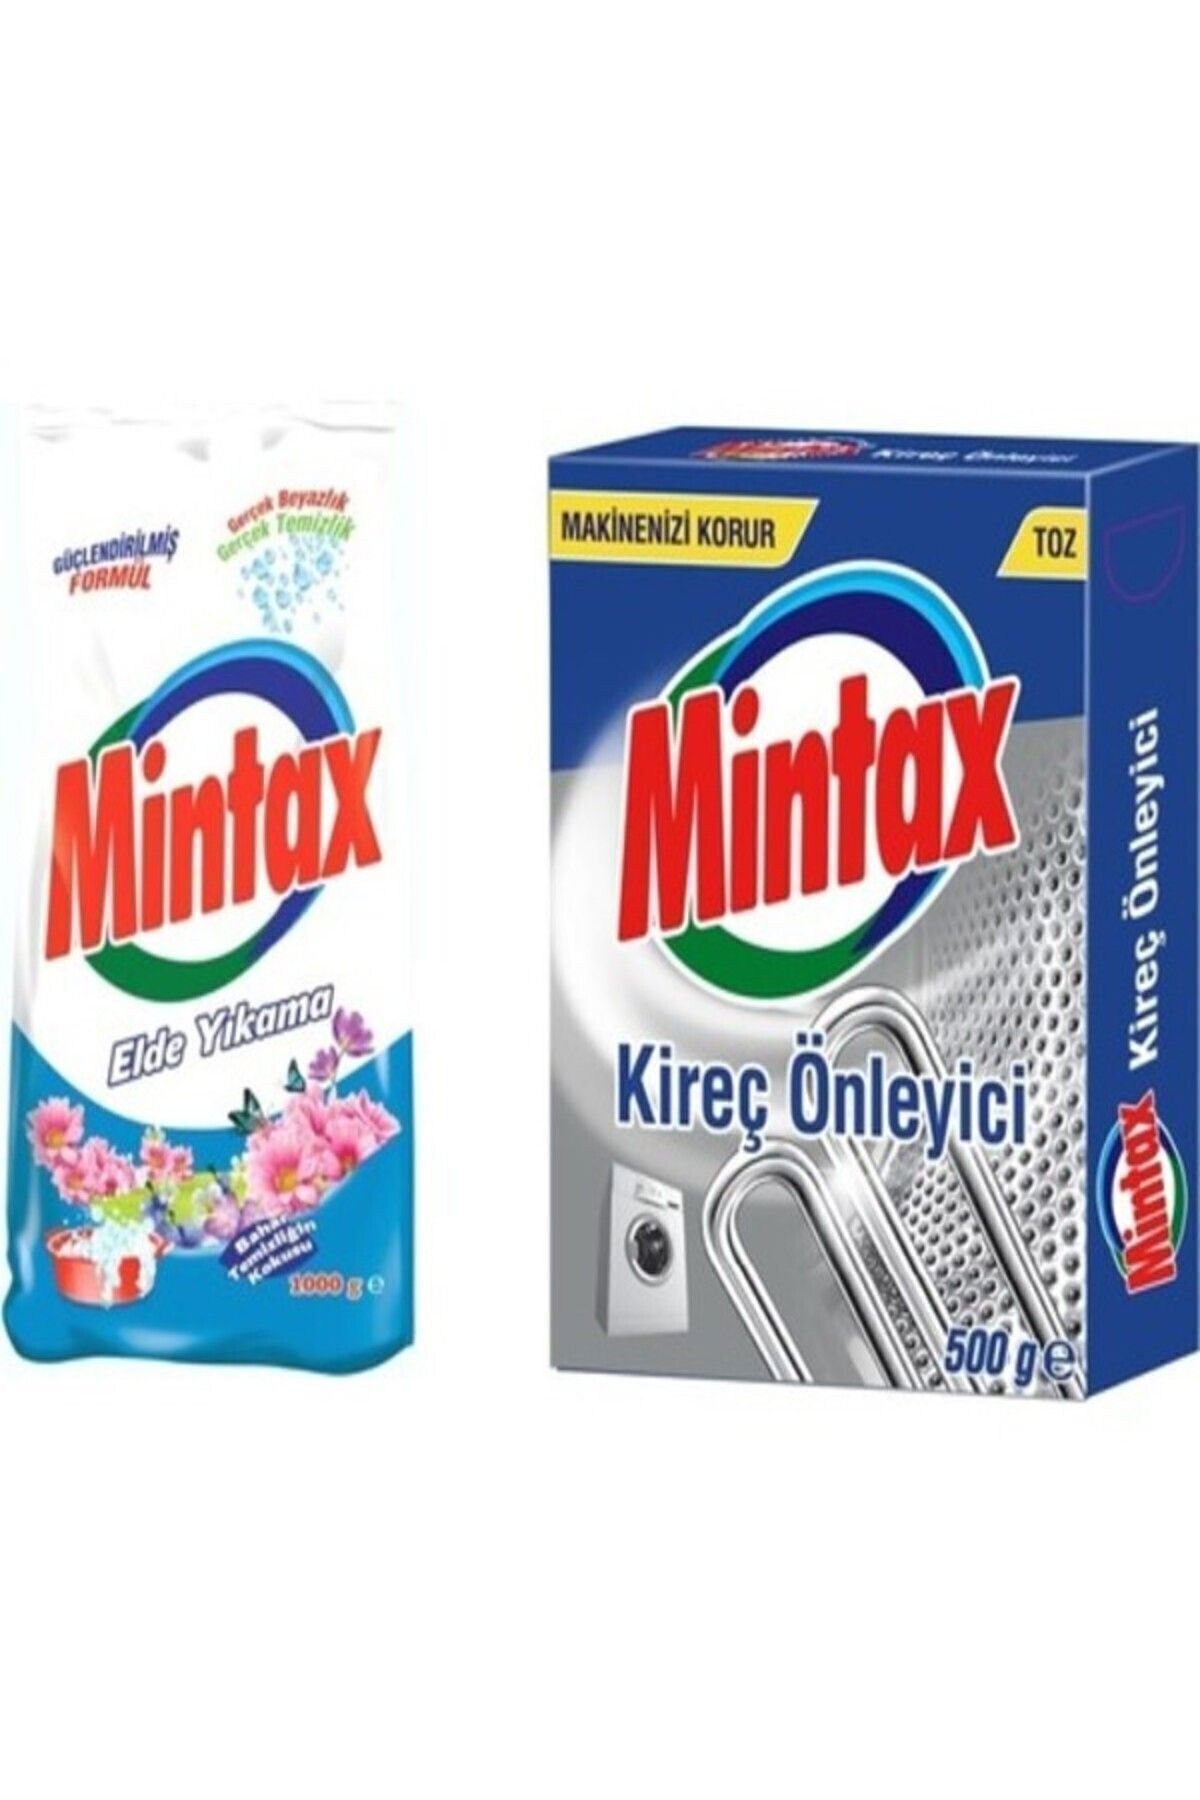 Mintax Elde Yıkama Toz Deterjan 1 kg + Mintax Kireç Önleyici 500 gr